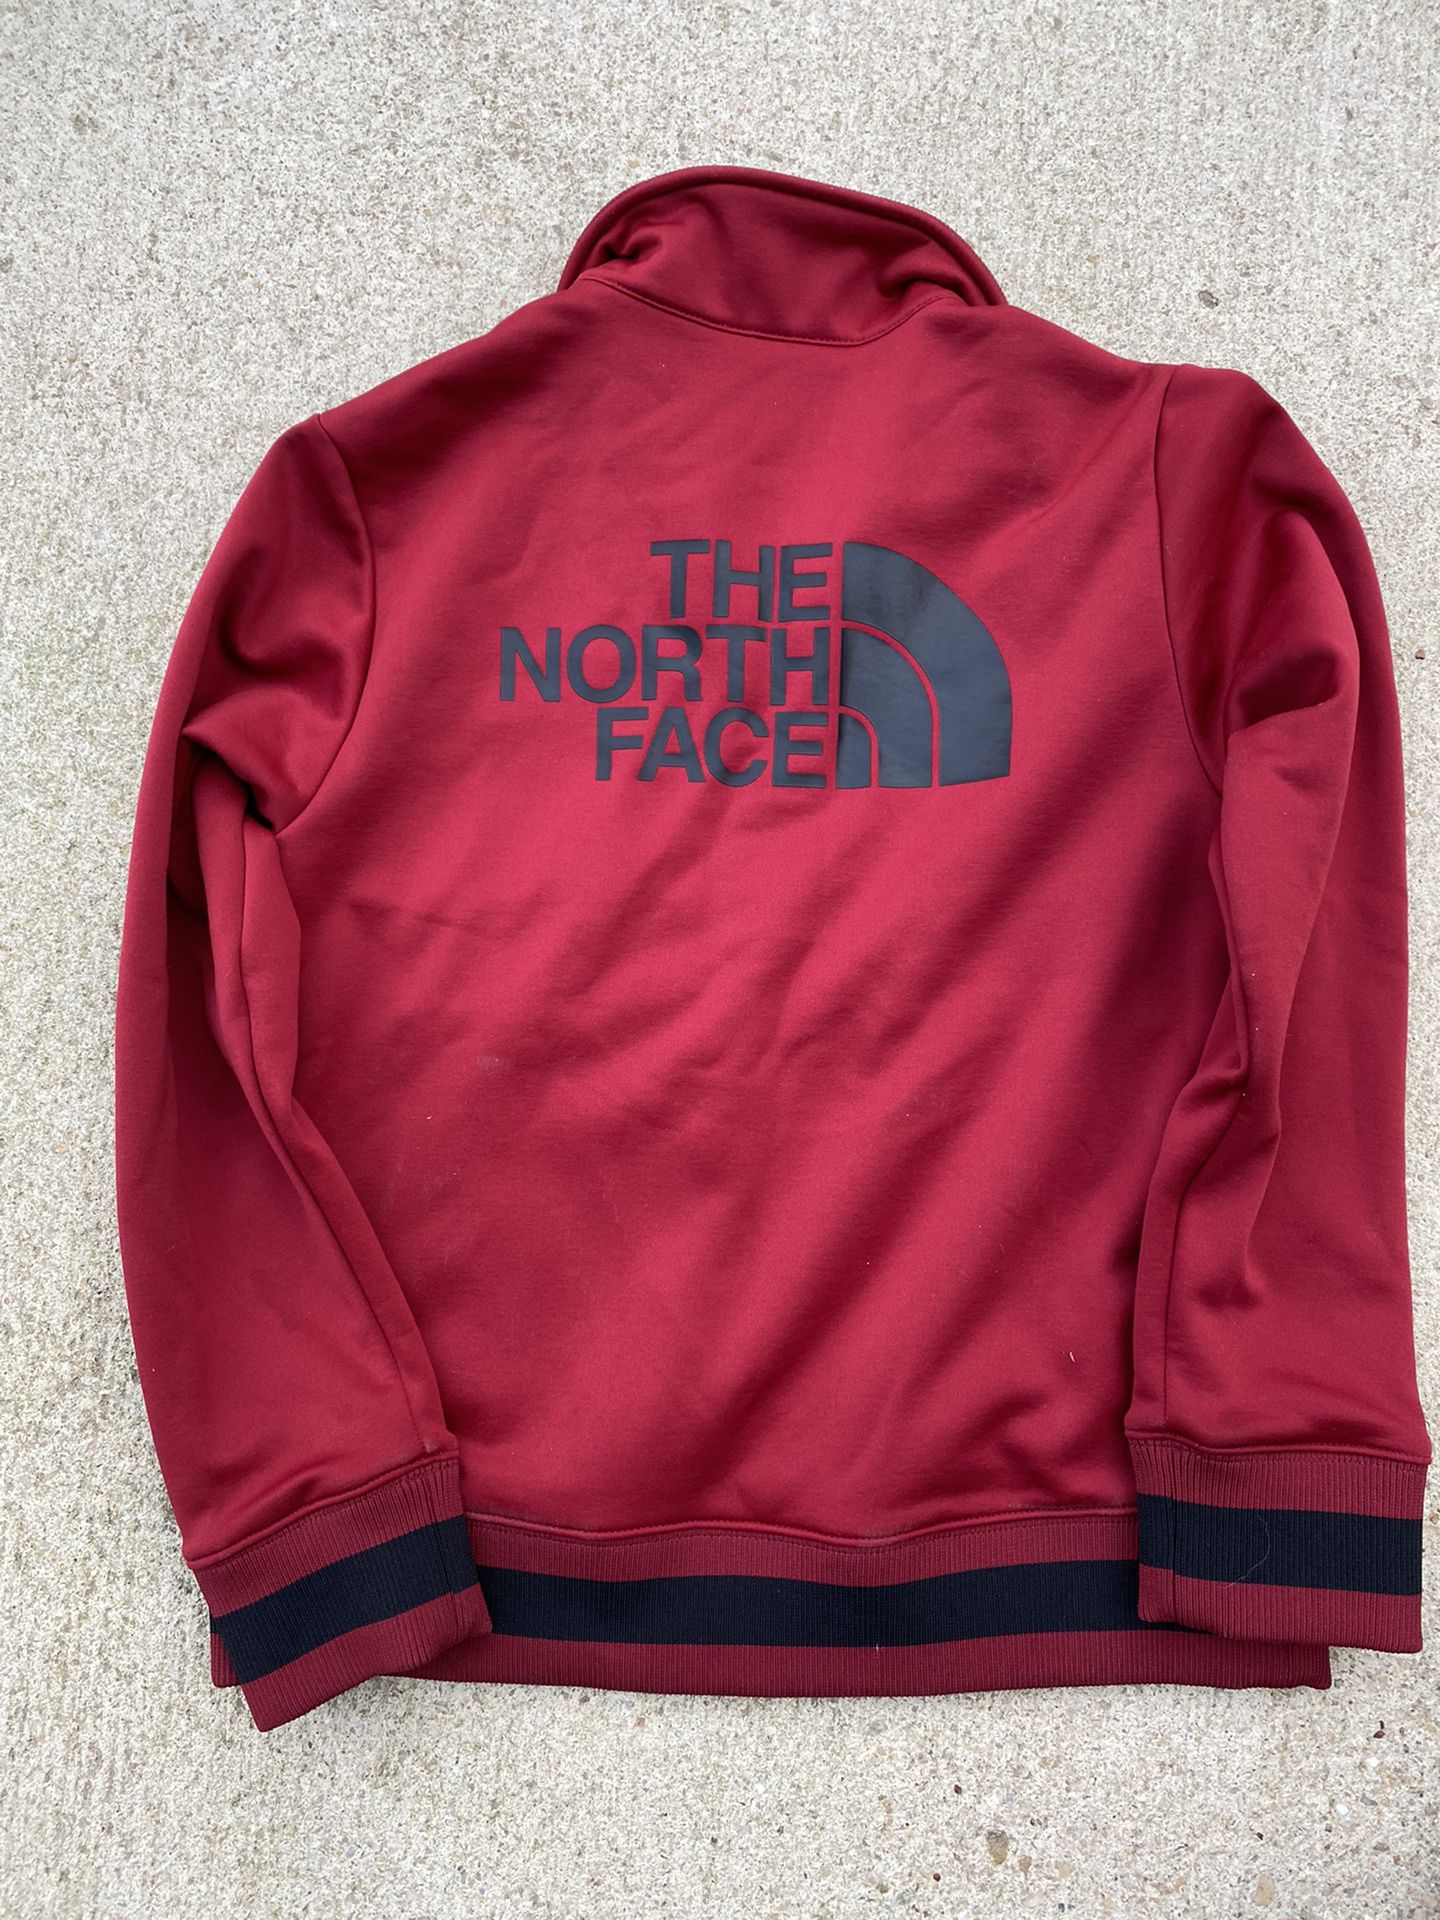 North Face Jacket For Kids 10/12